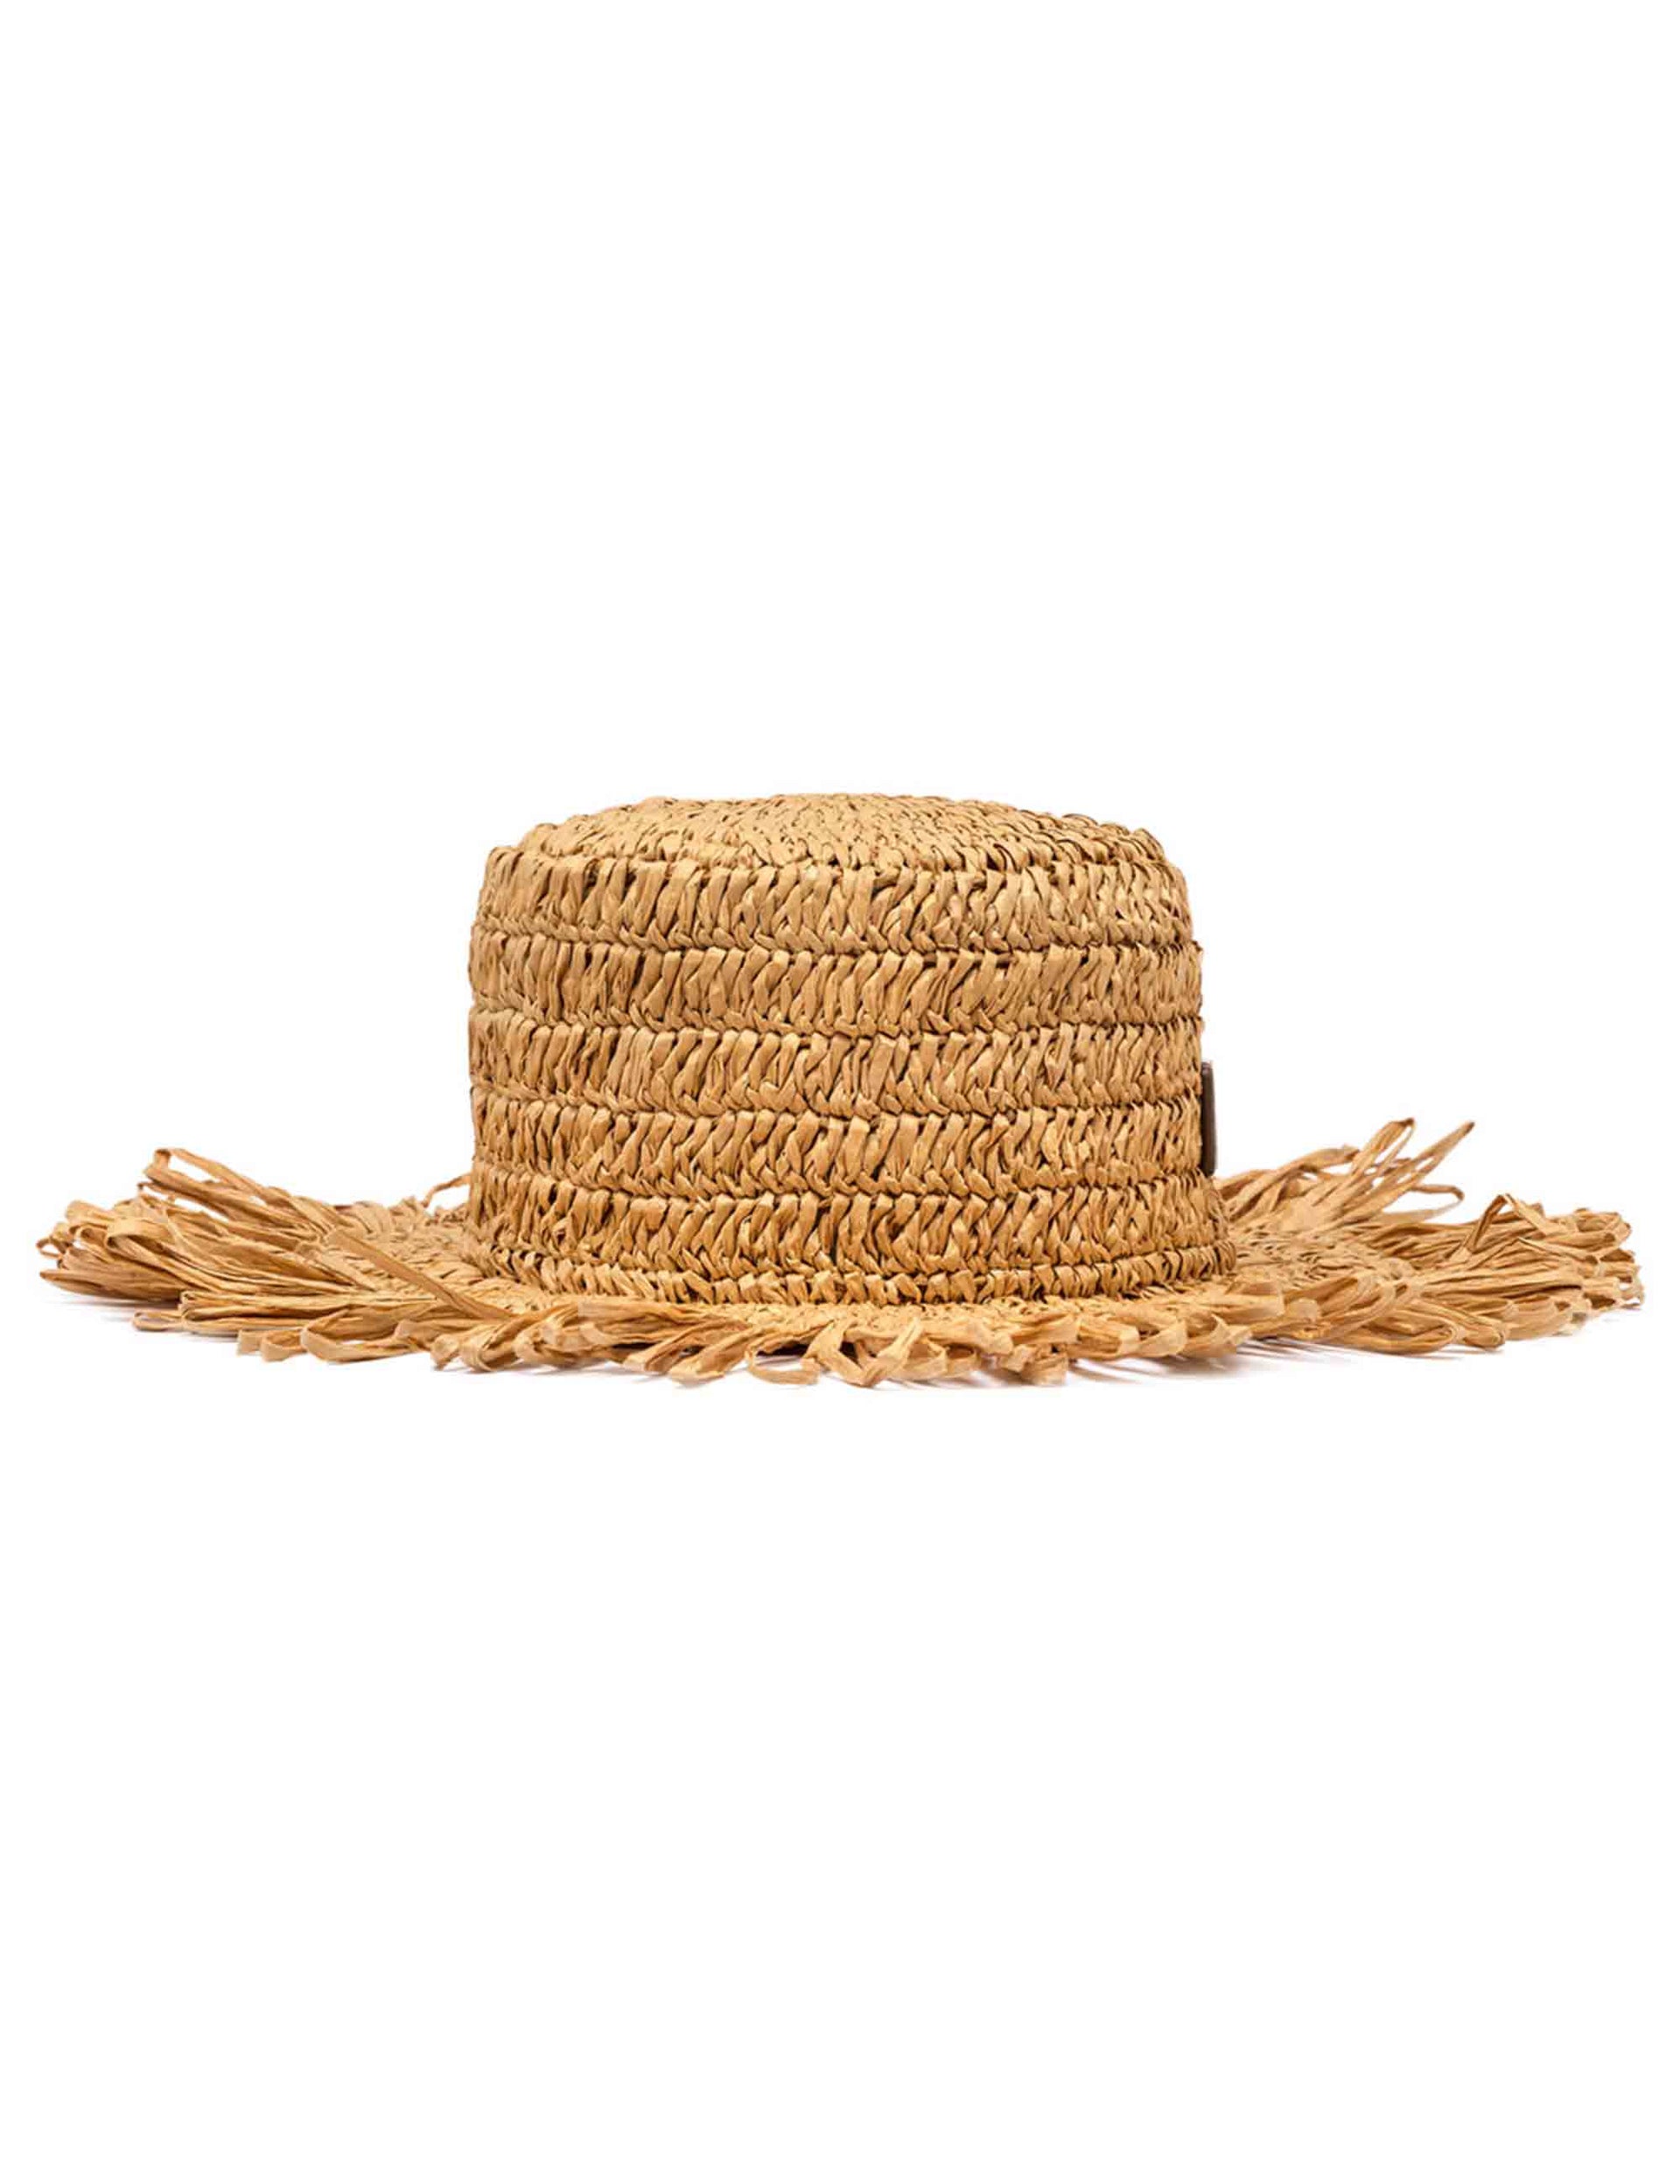 Women's hats in natural raffia